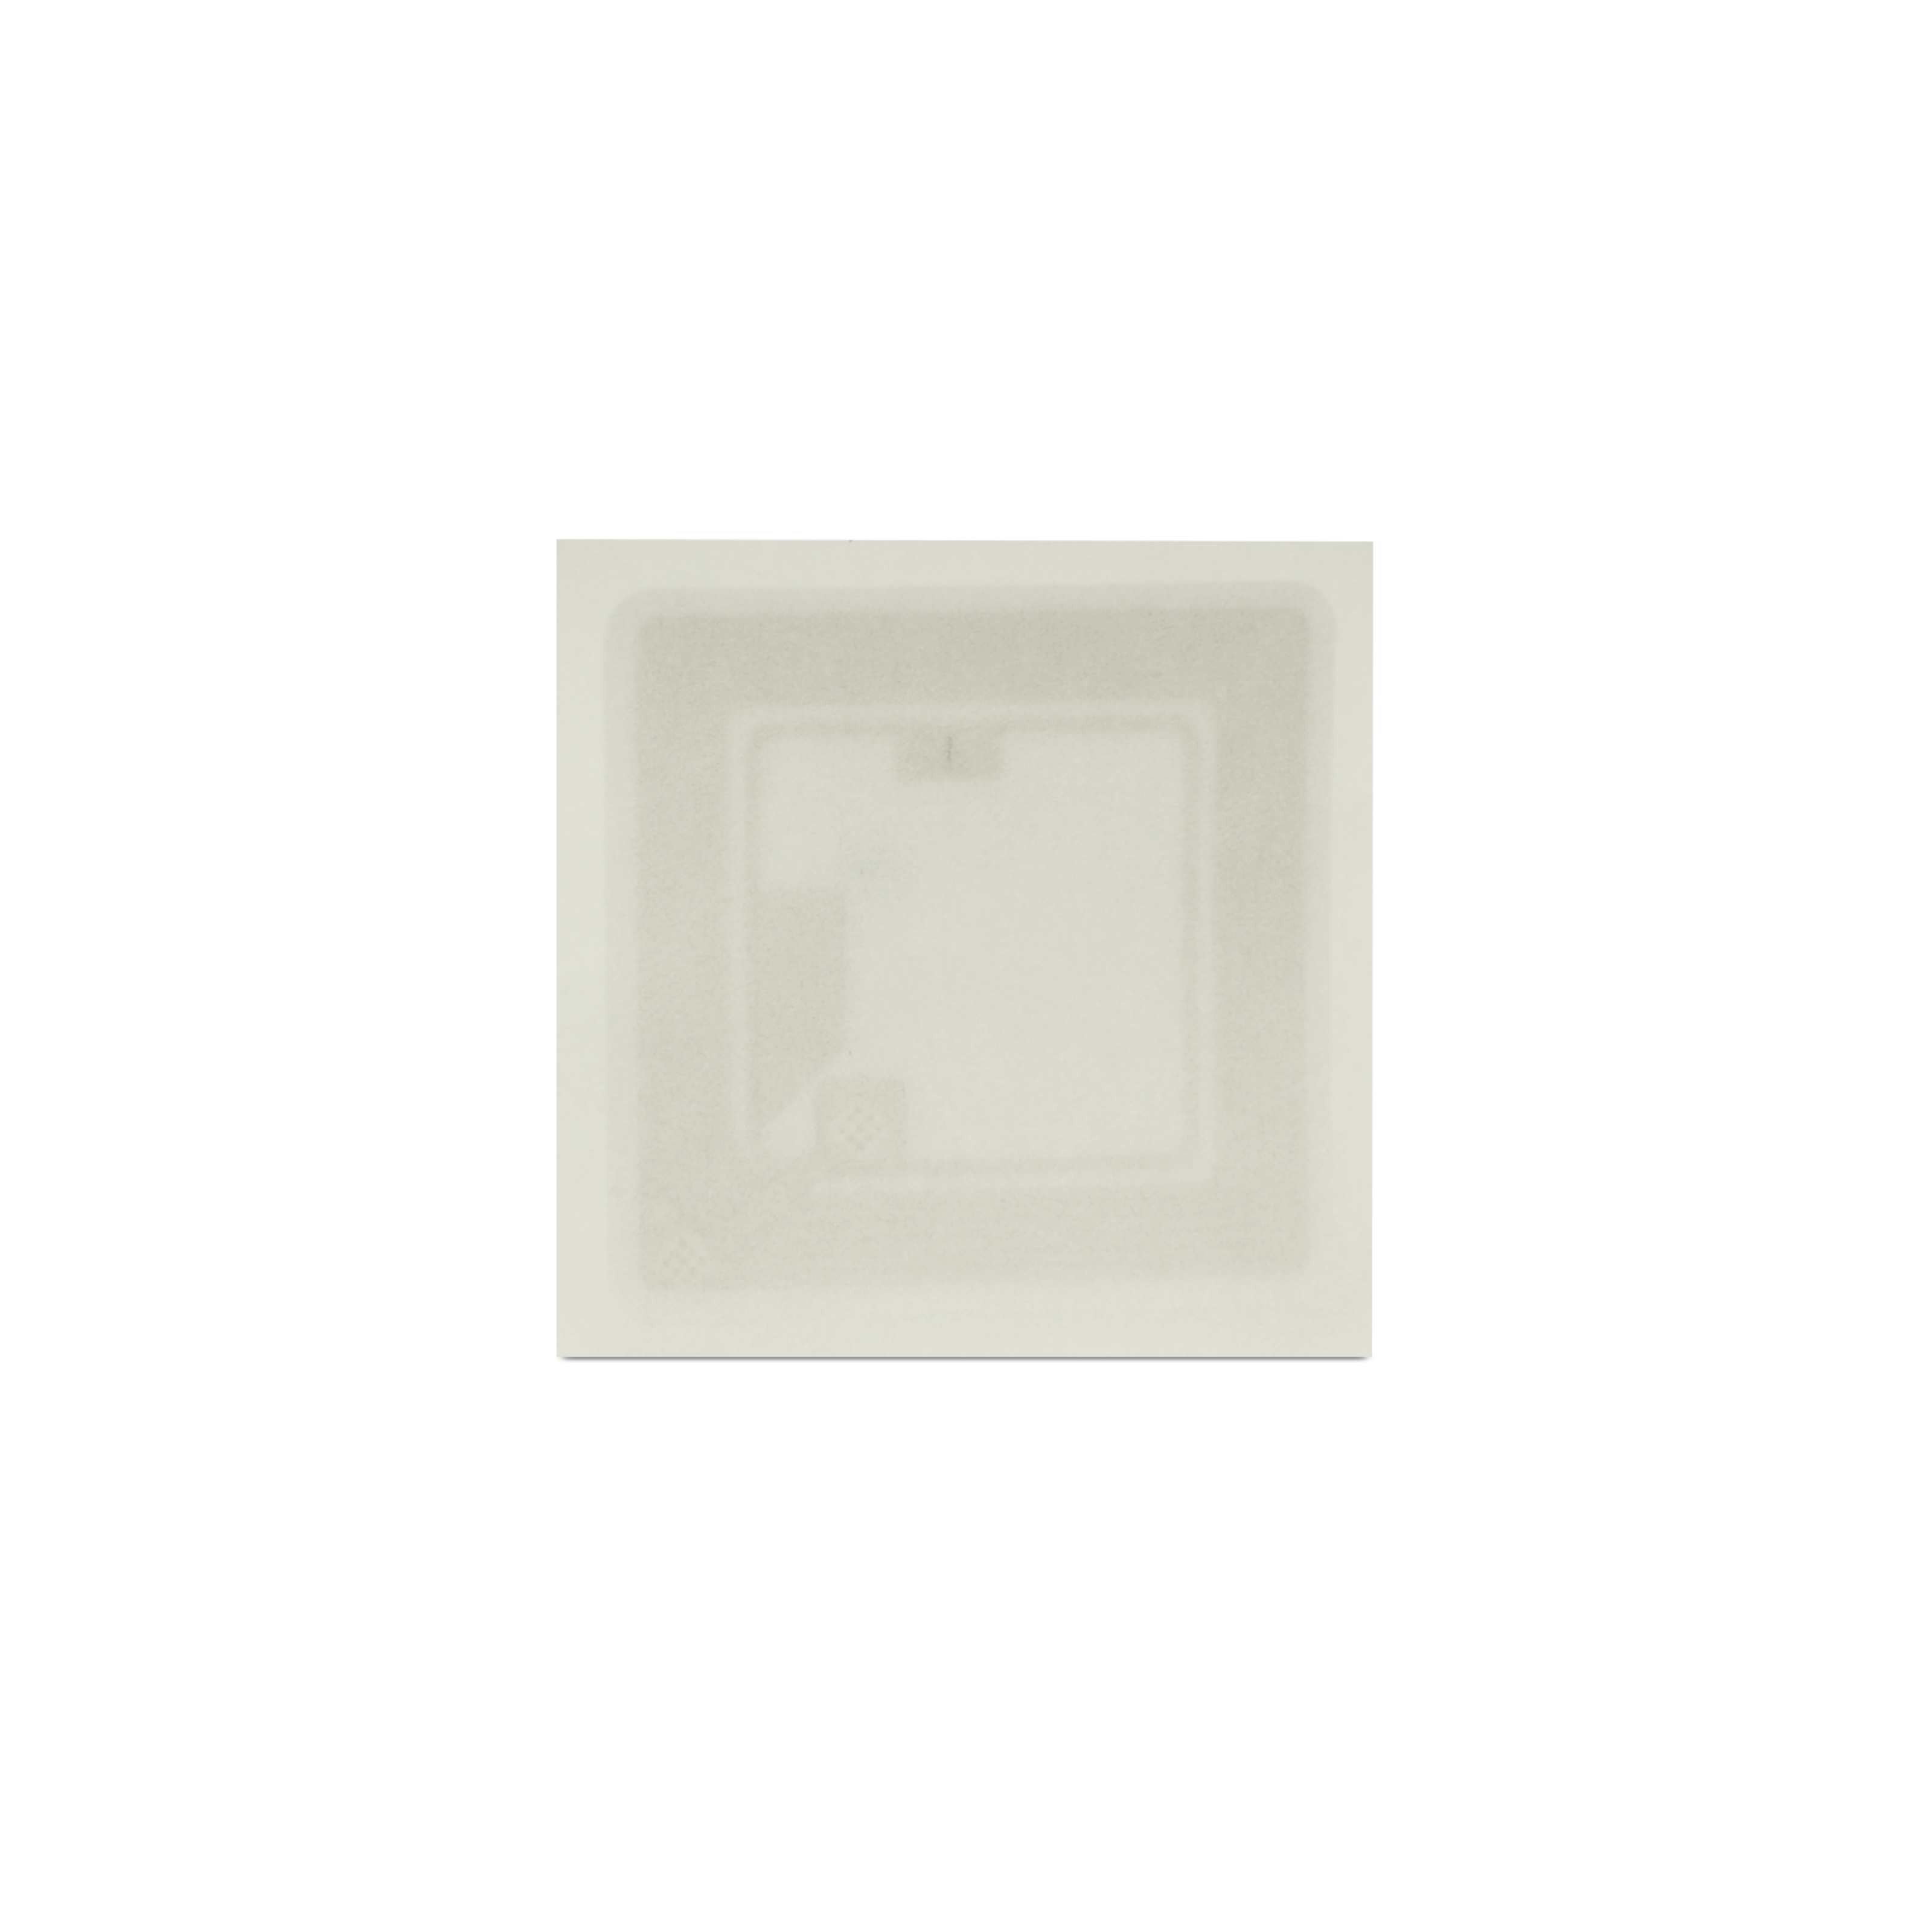 NFC Sticker PET - 35 x 35 mm - NTAG213 - 180 Byte - square - white 